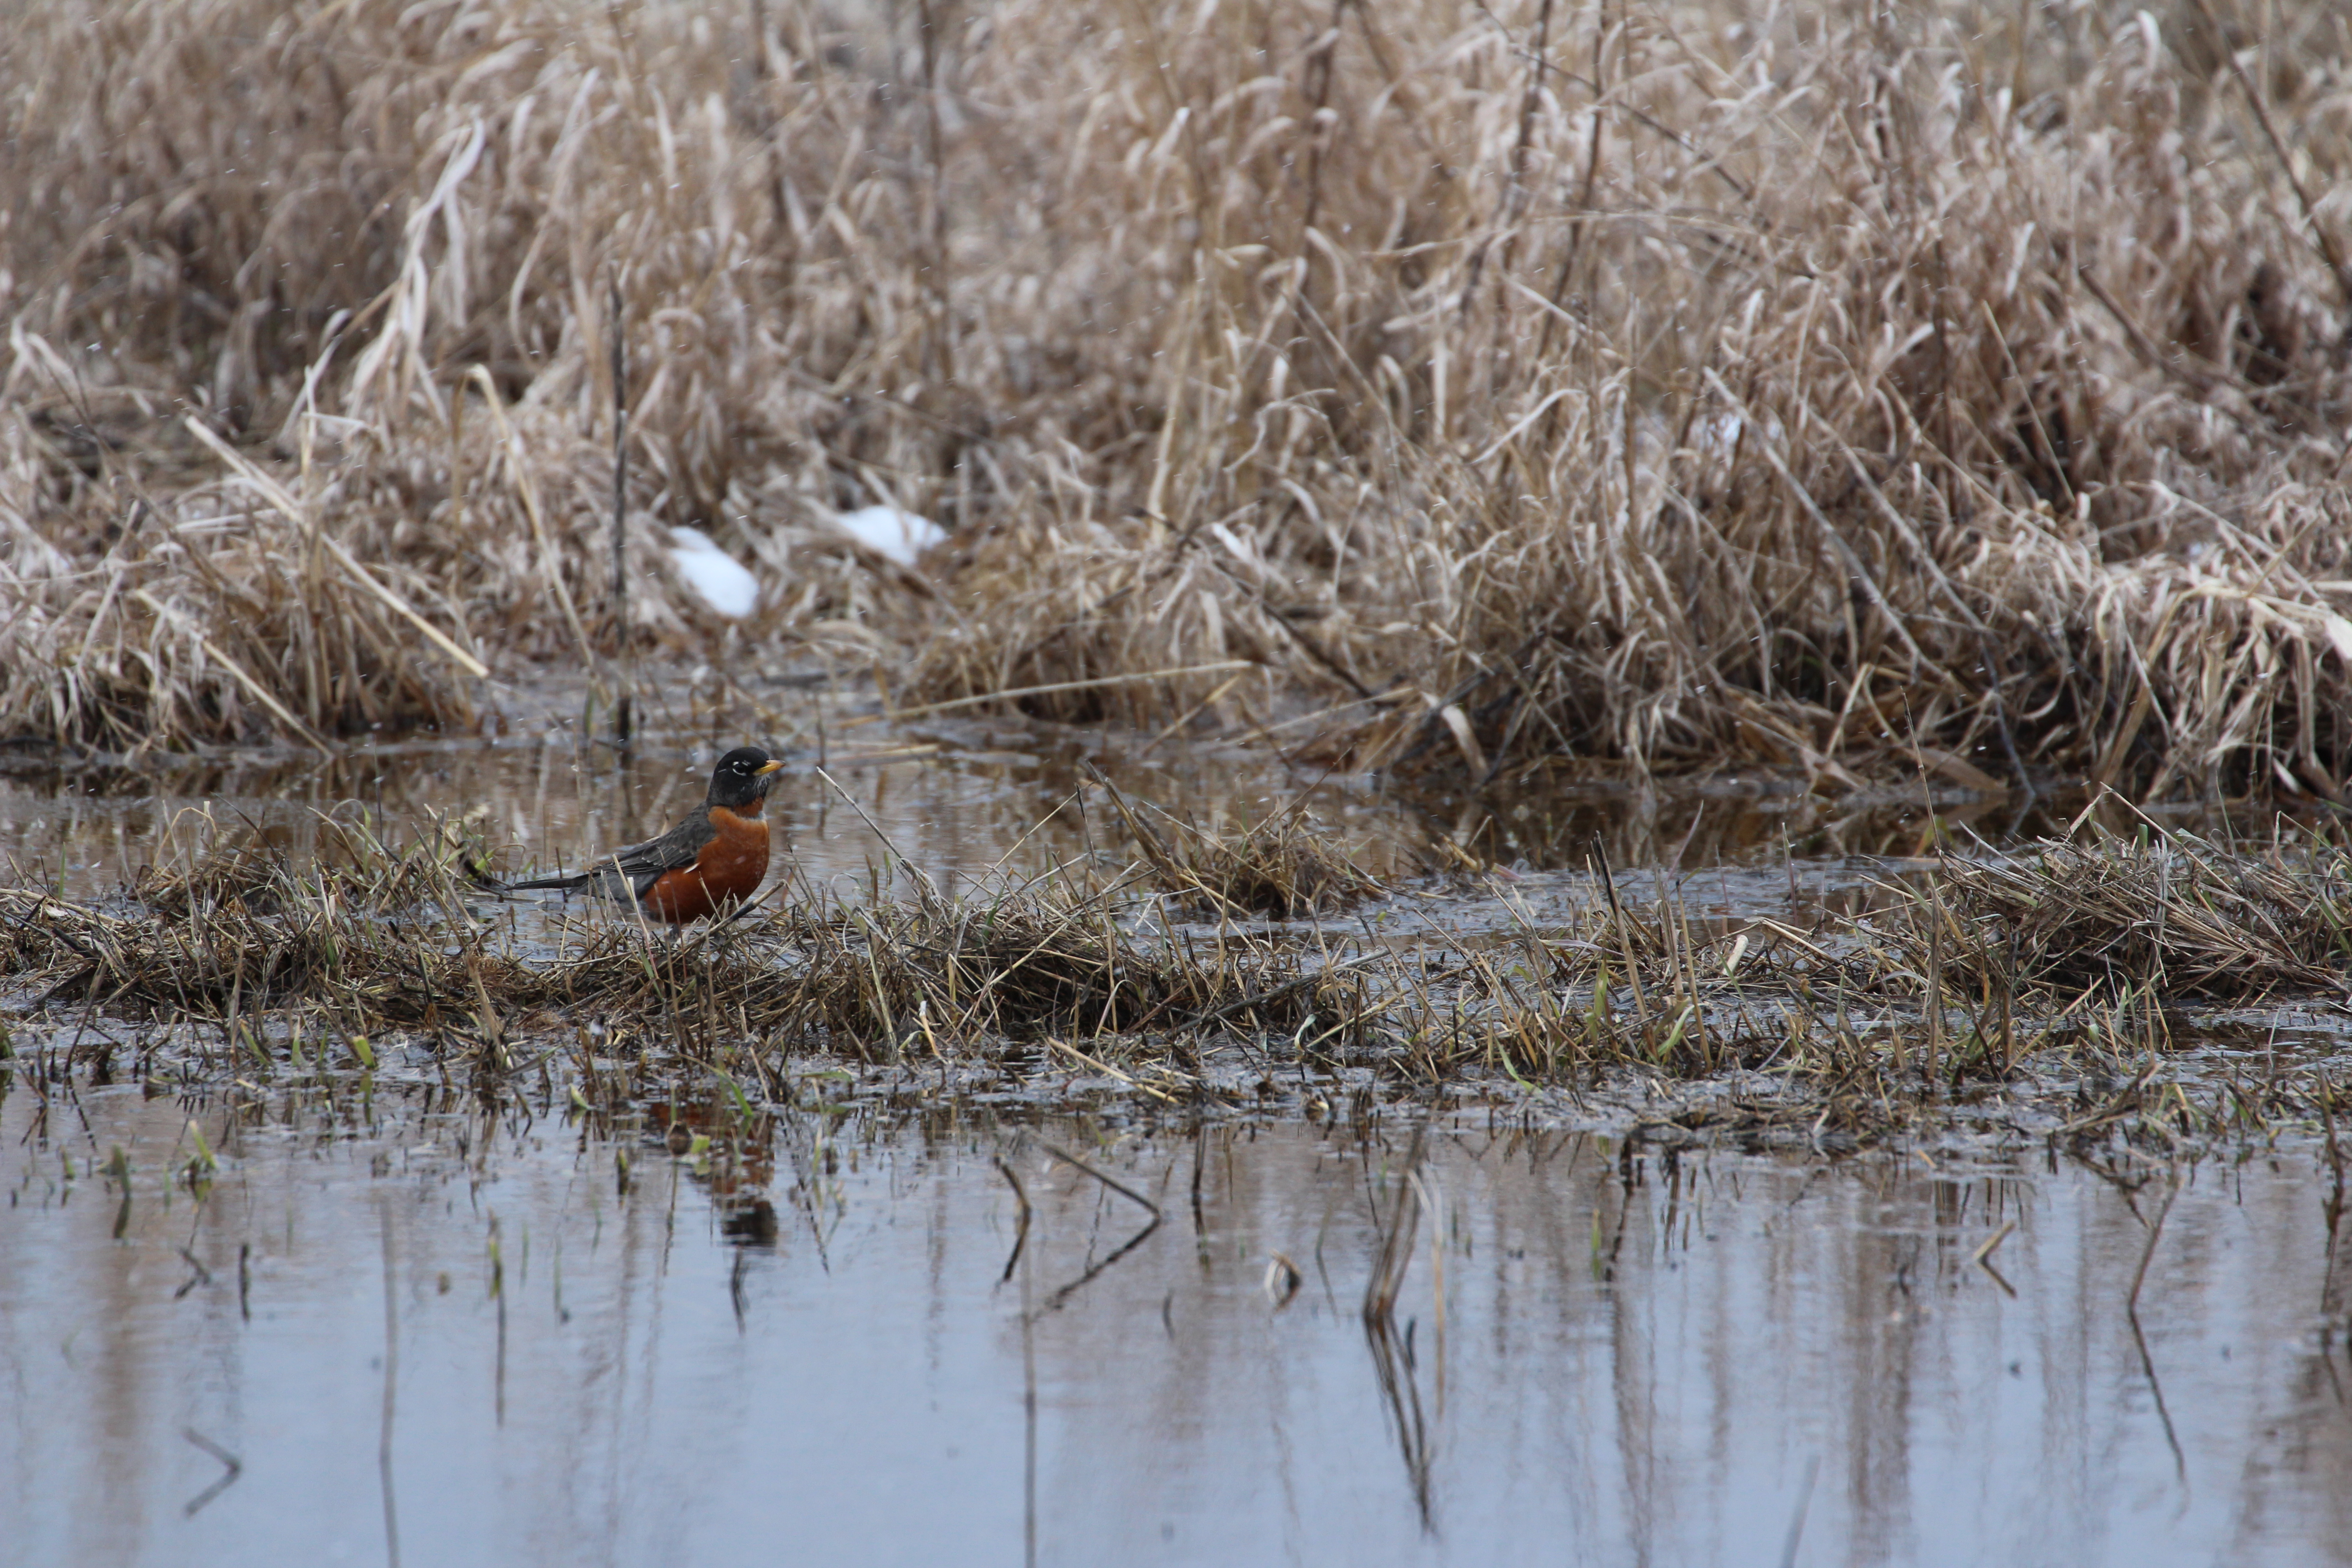 Shiawassee American Robin in wetland by Sara Giles